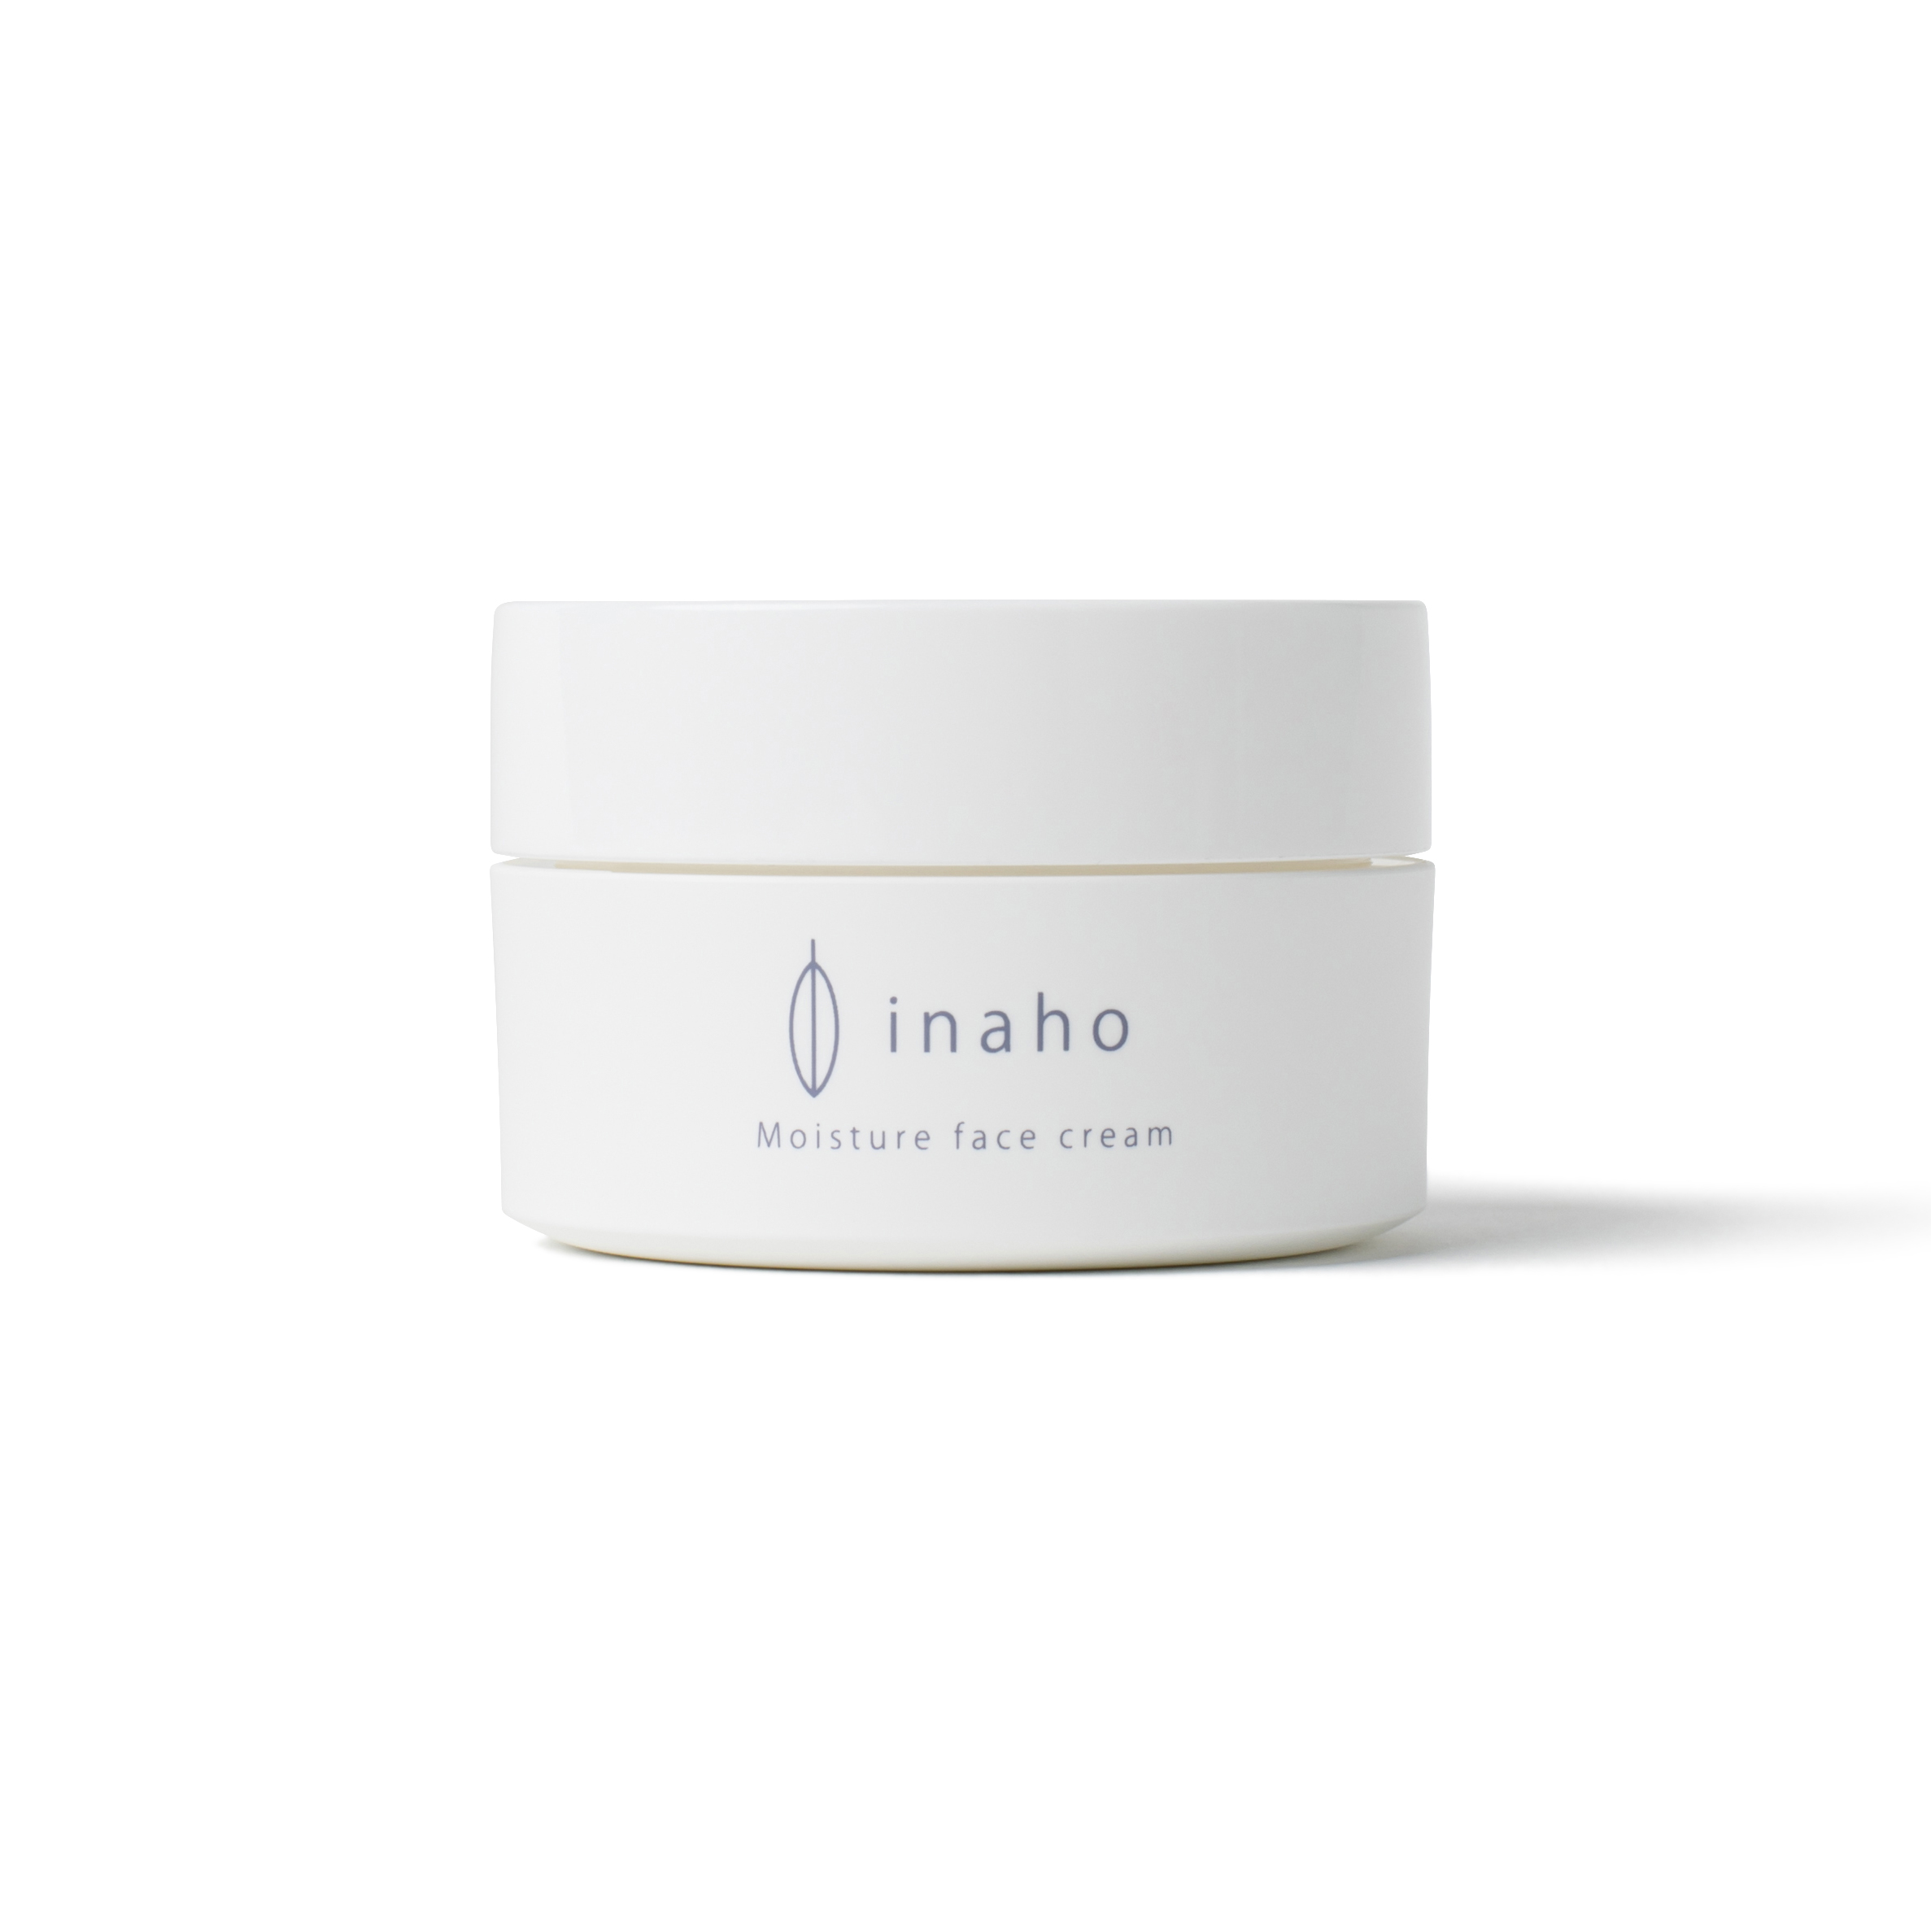 inaho moisture face cream